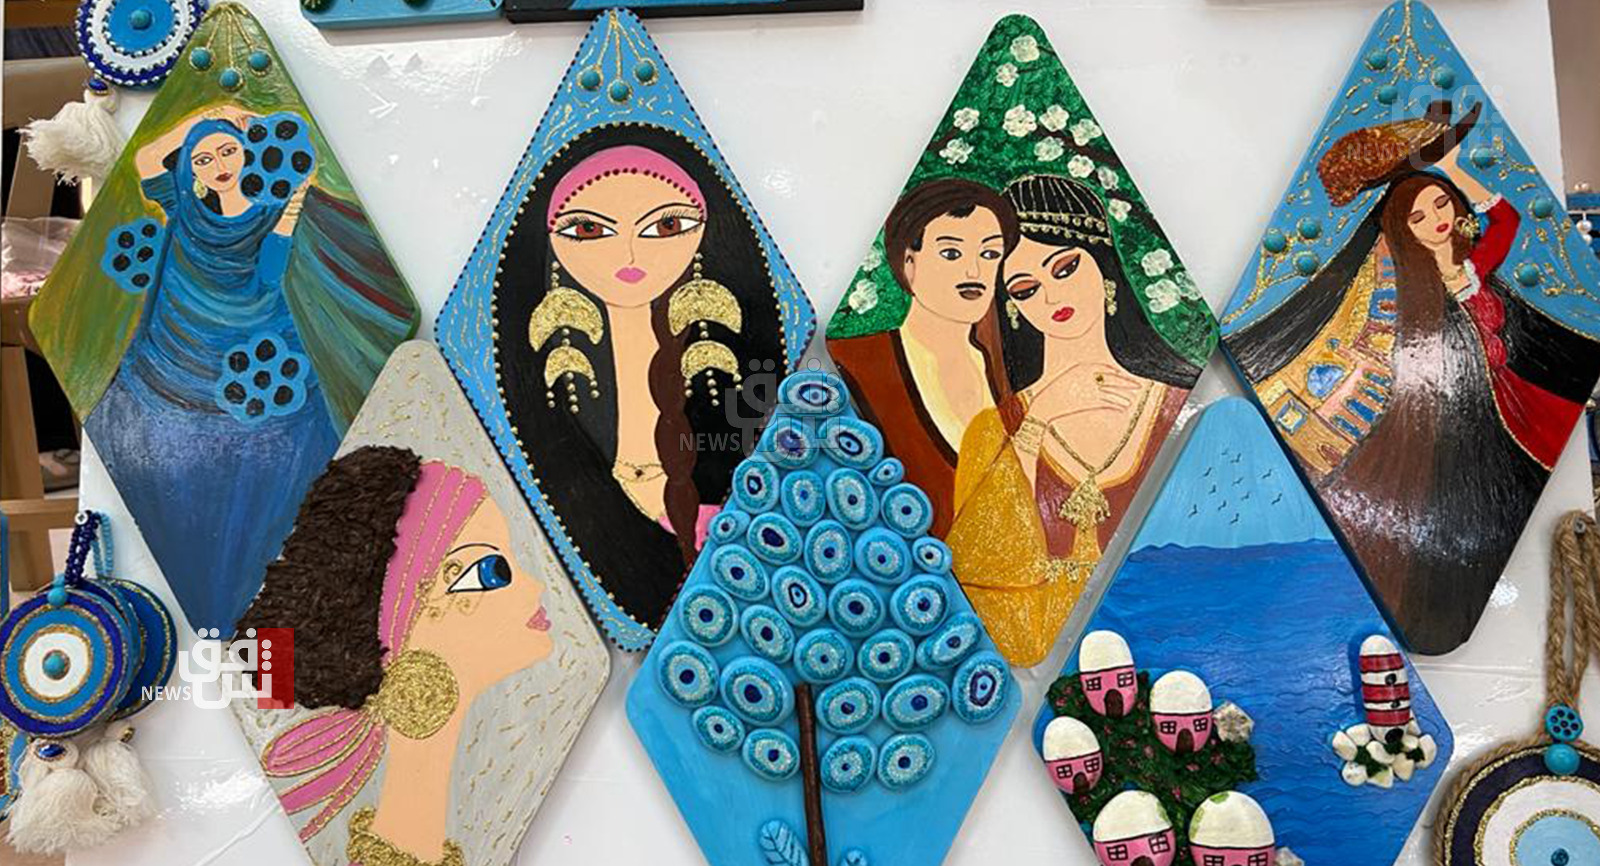 Erbil's Flowers Bazaar: A Vibrant Mosaic of Handicrafts Bridging Generations